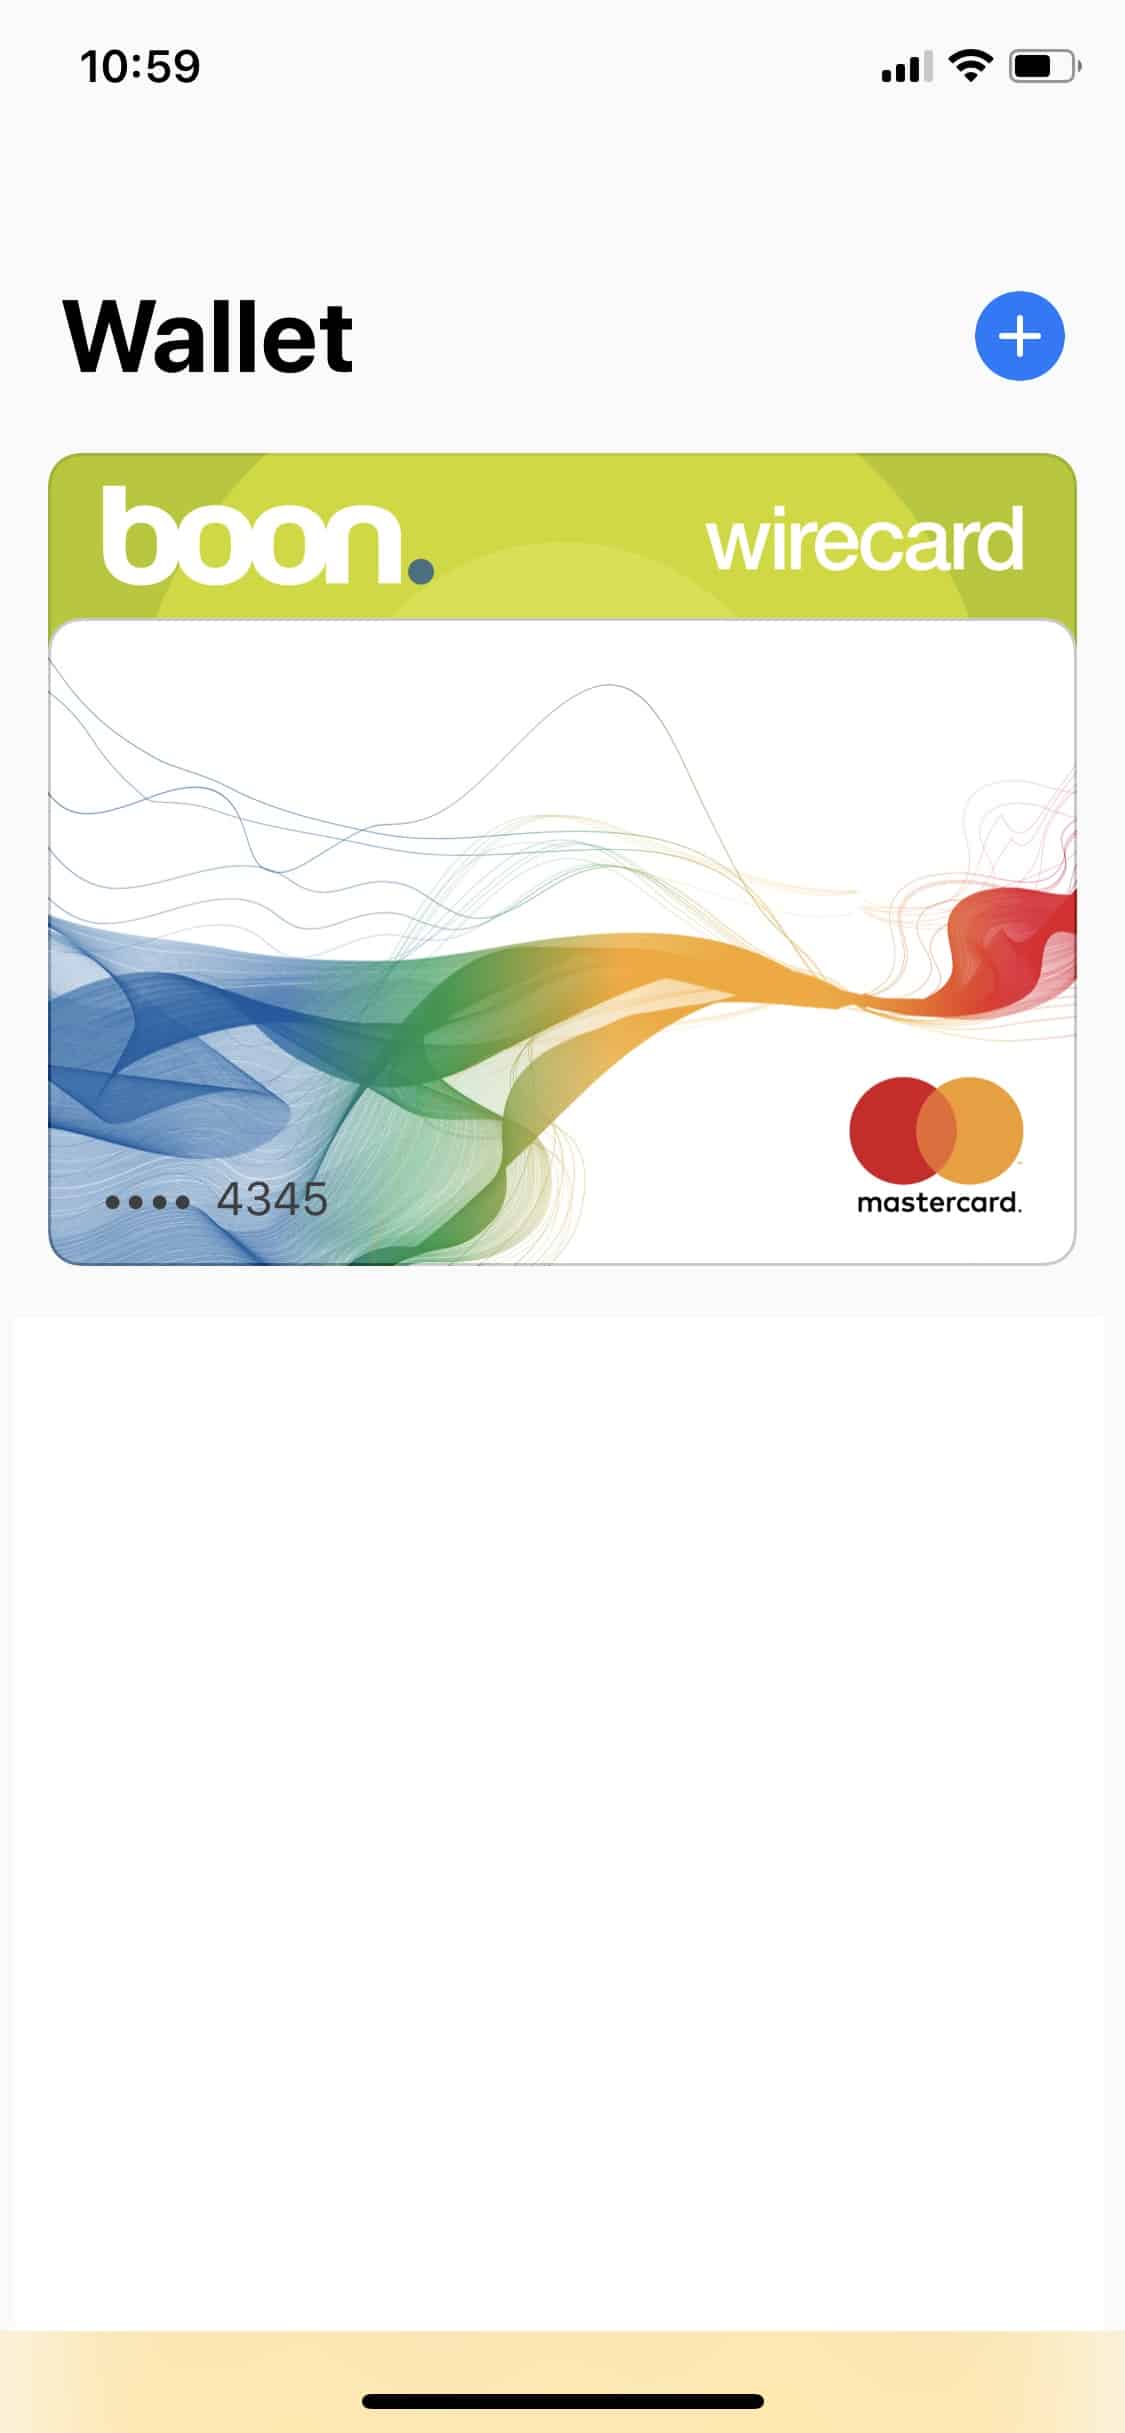 Apple Wallet - Übersicht - Apple Pay - Kreditkarte - .boon - VIMpay